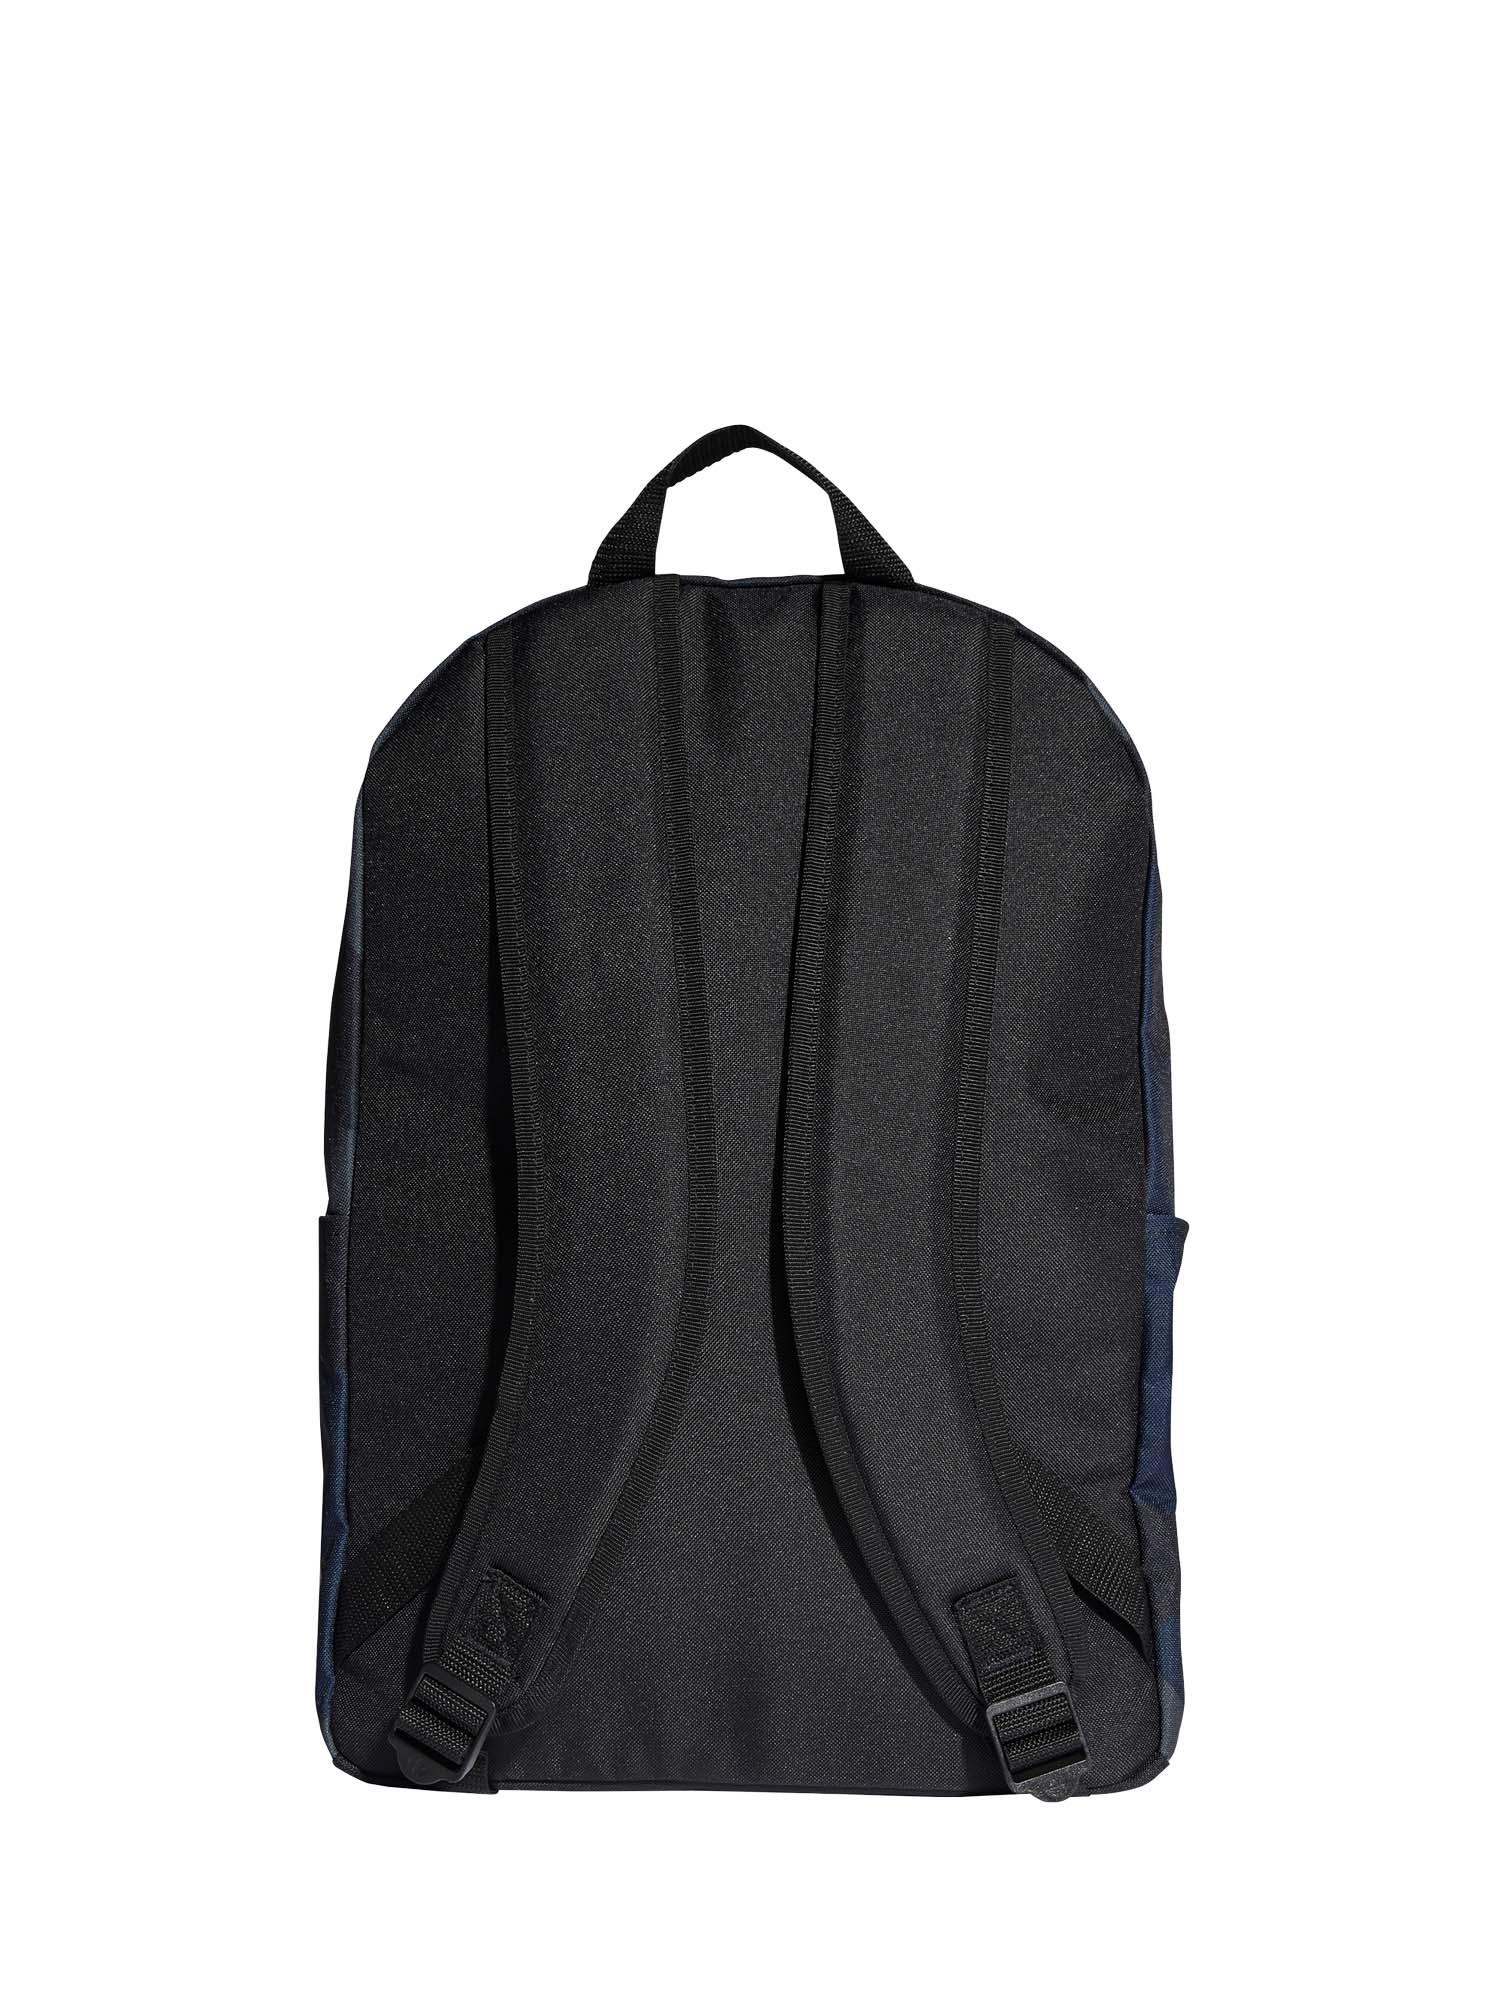 Backpack Originals Camo H34627 Adidas Classic